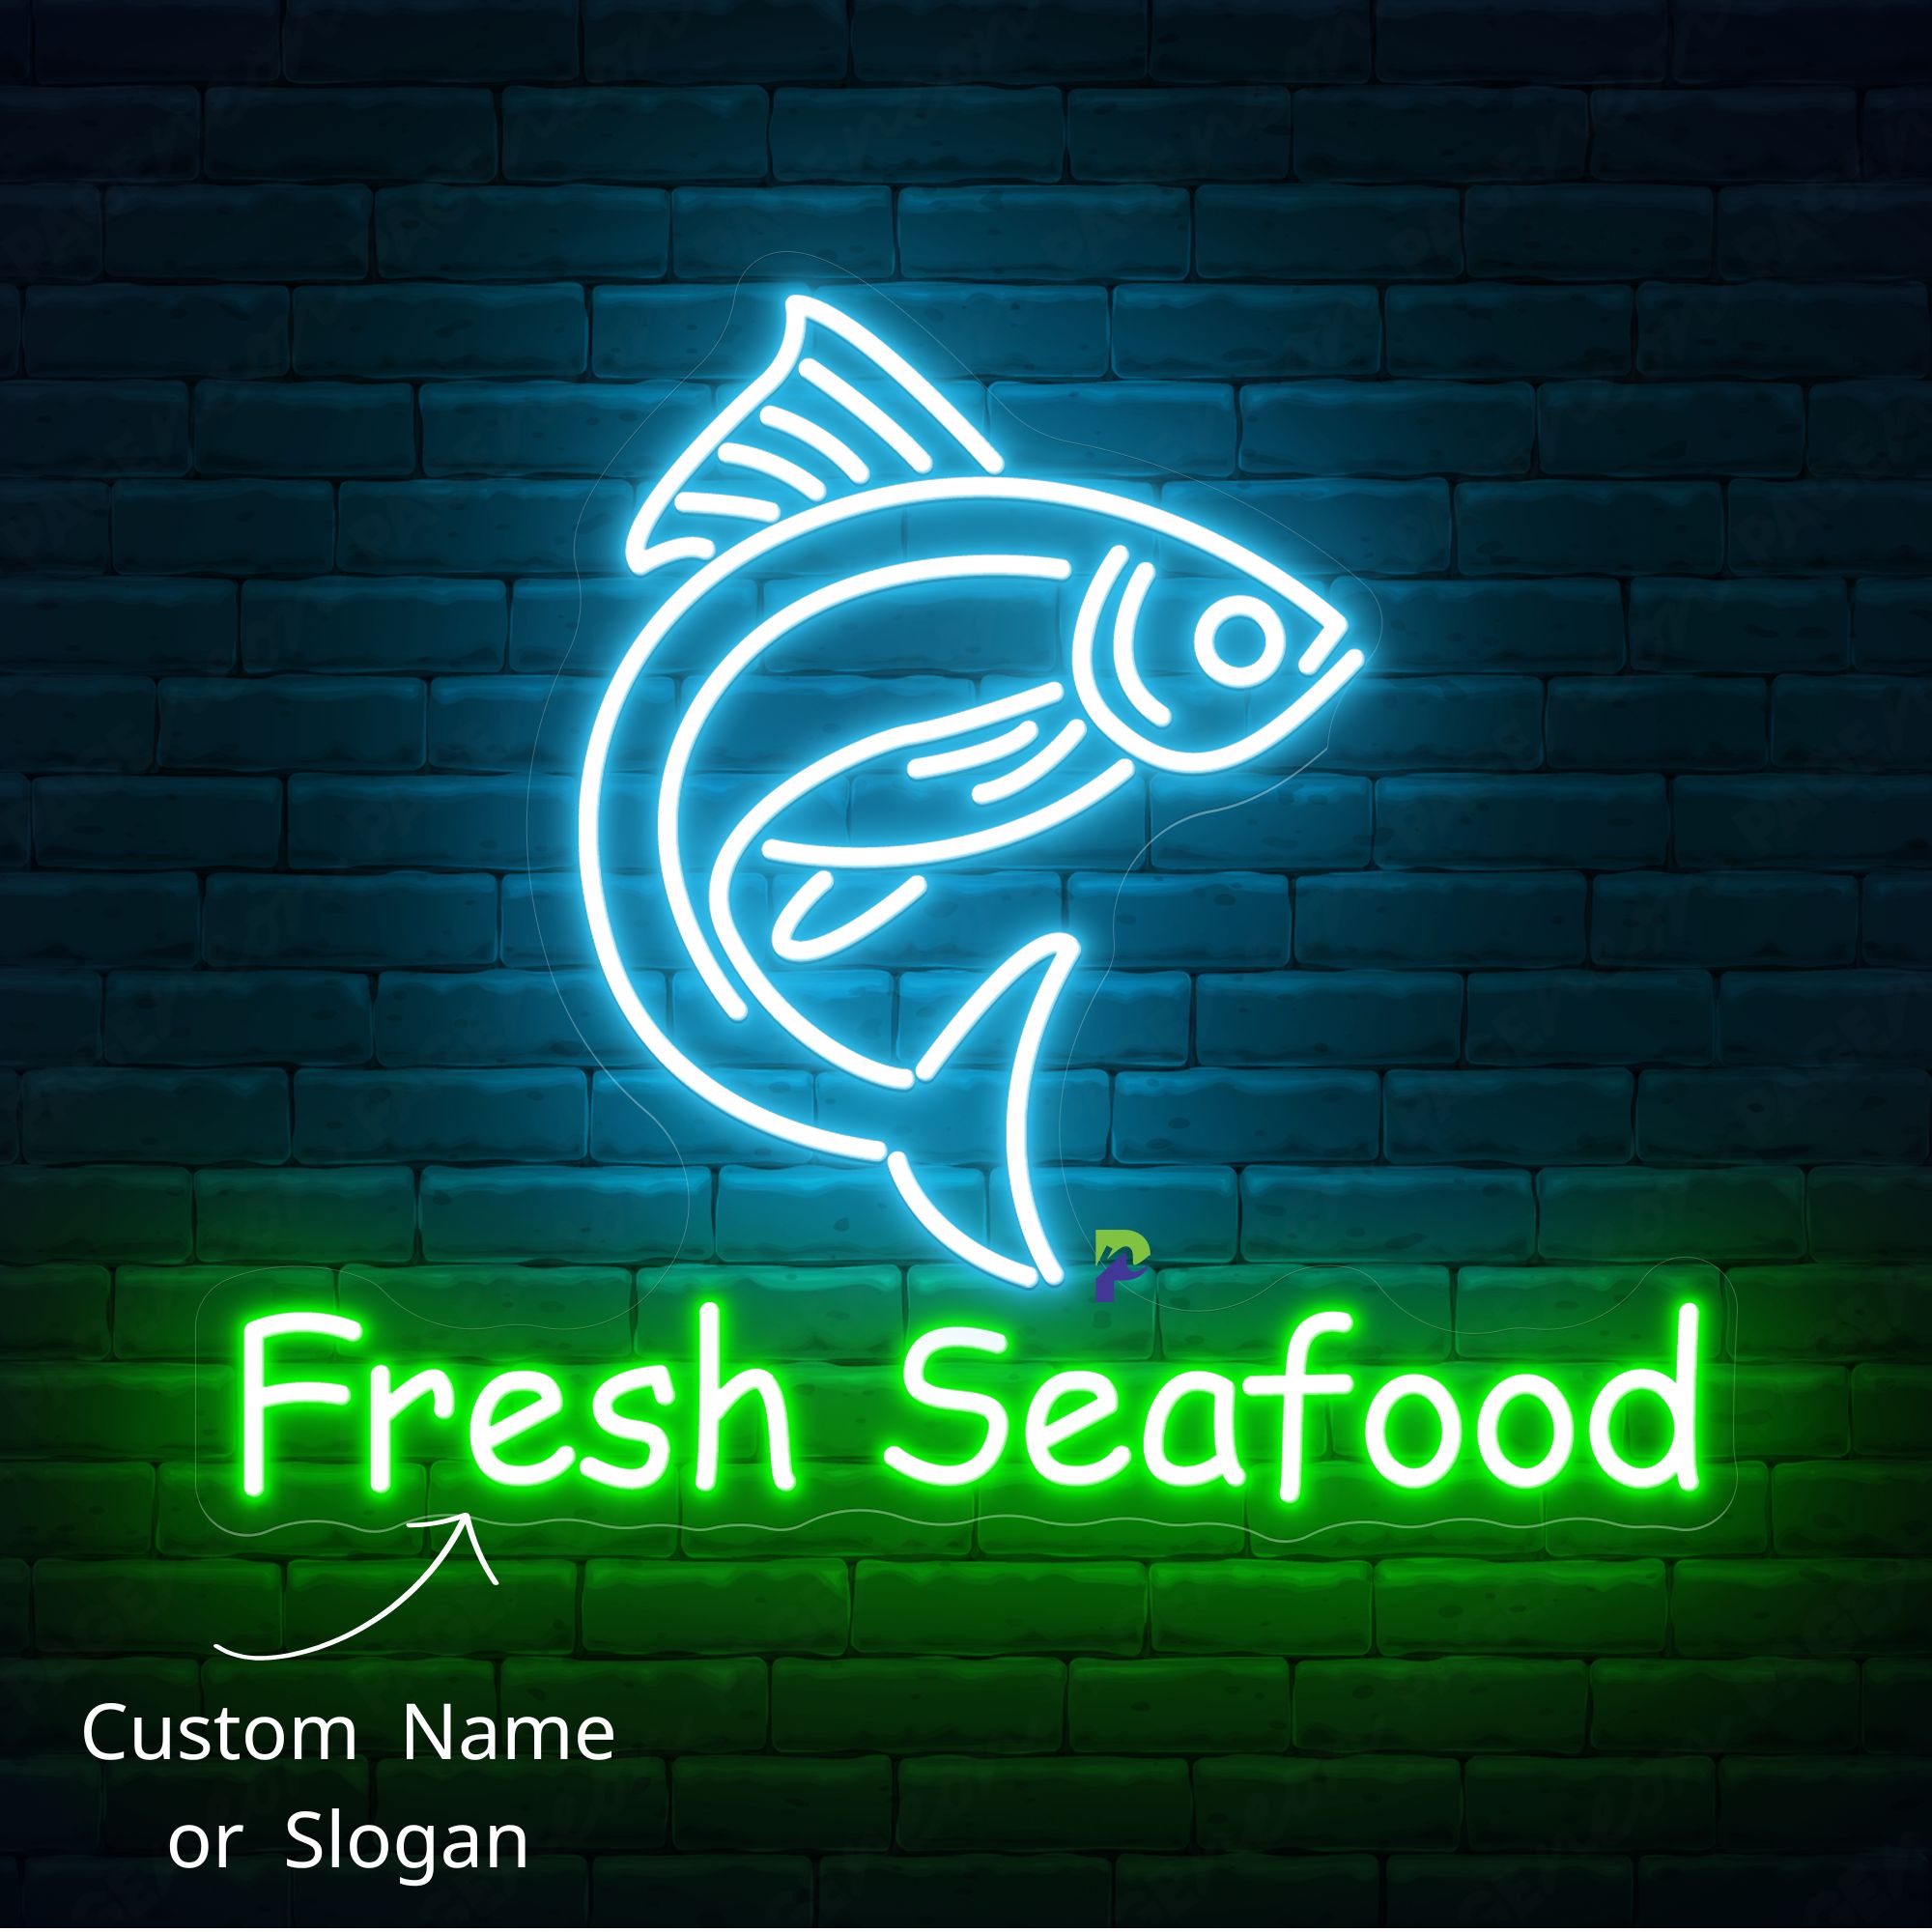 Fresh Seafood Neon Sign Led Light For Restaurant